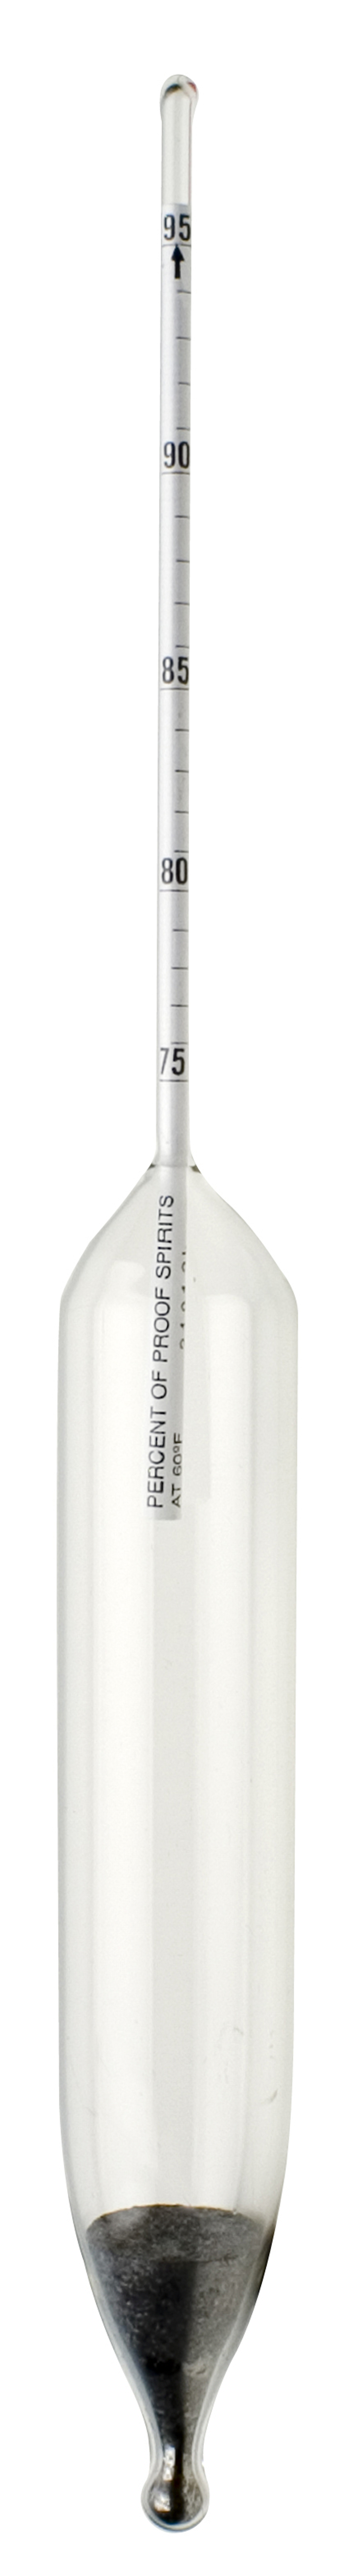 SP Bel-Art, H-B DURAC 145/165 Percent Alcohol Proof – Ethyl Alcohol Hydrometer